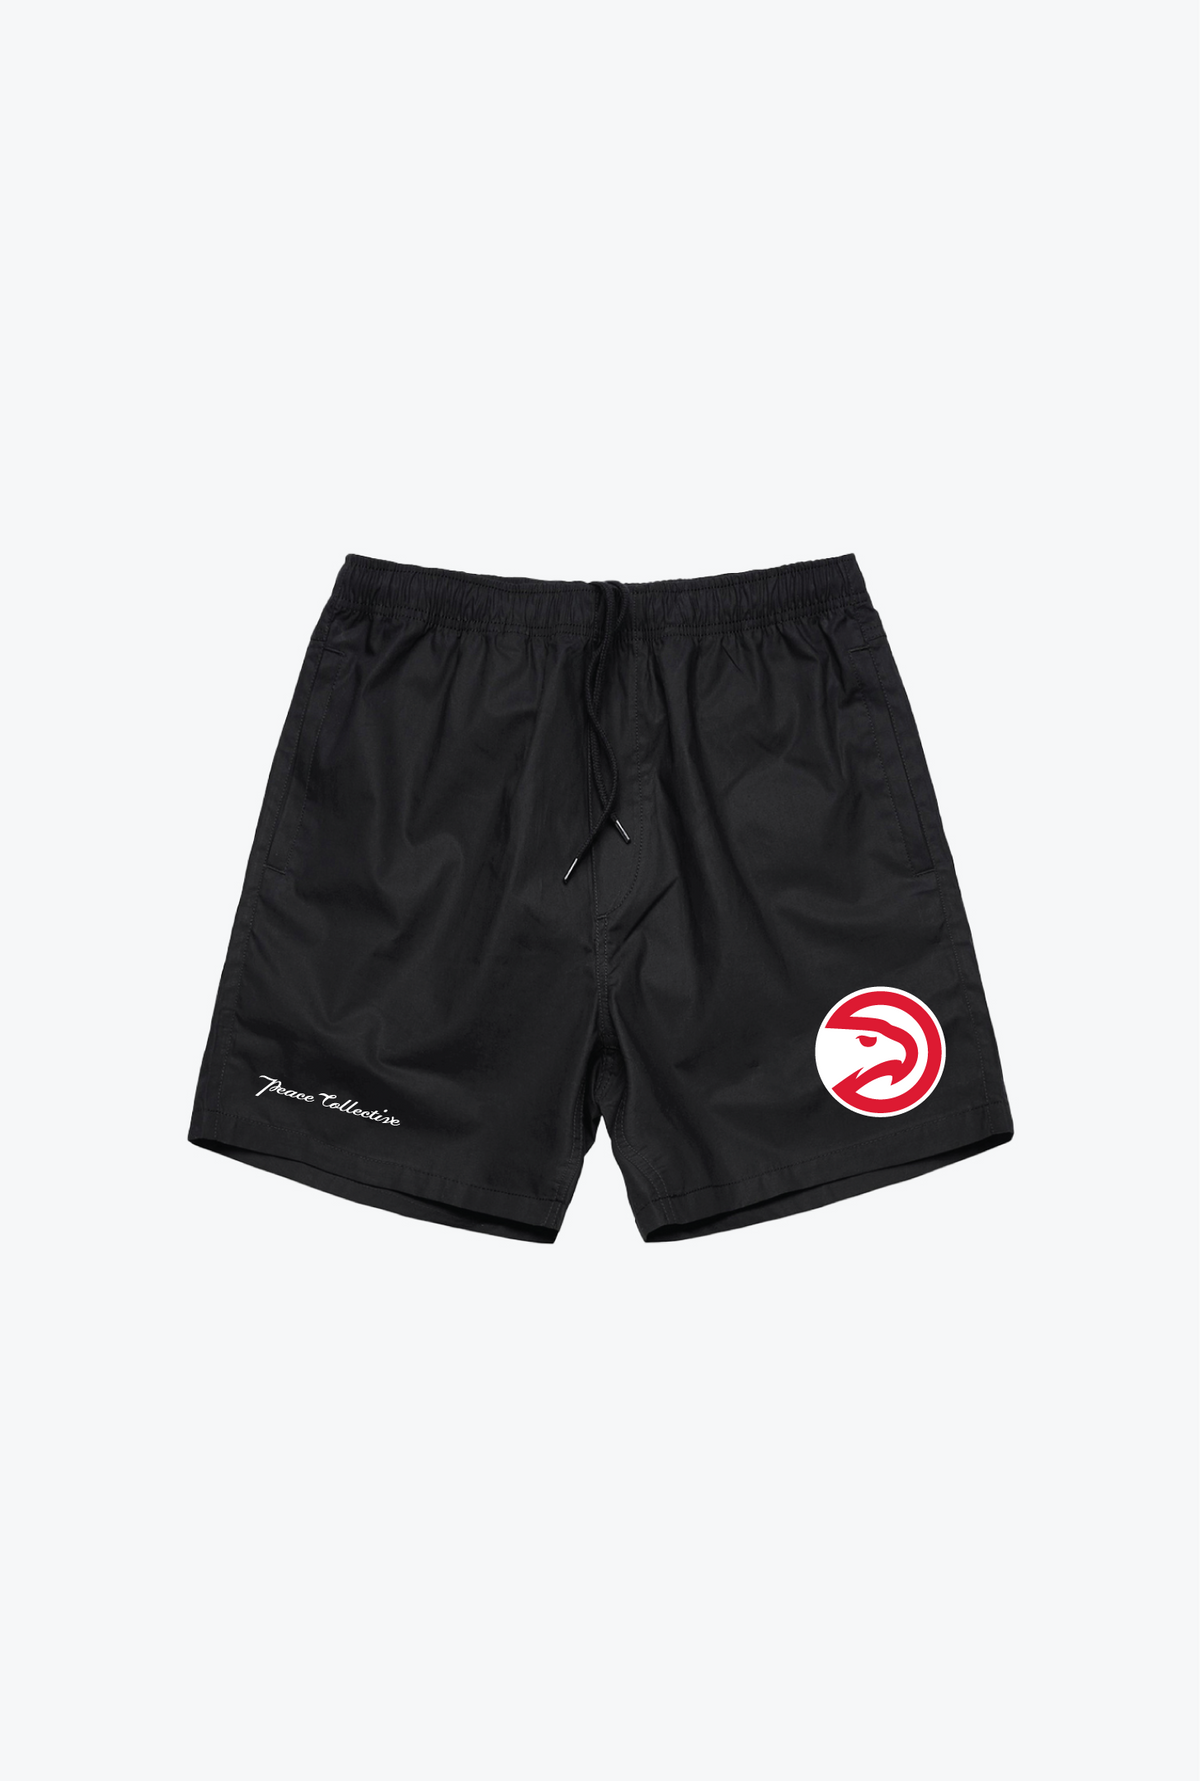 Atlanta Hawks Board Shorts - Black